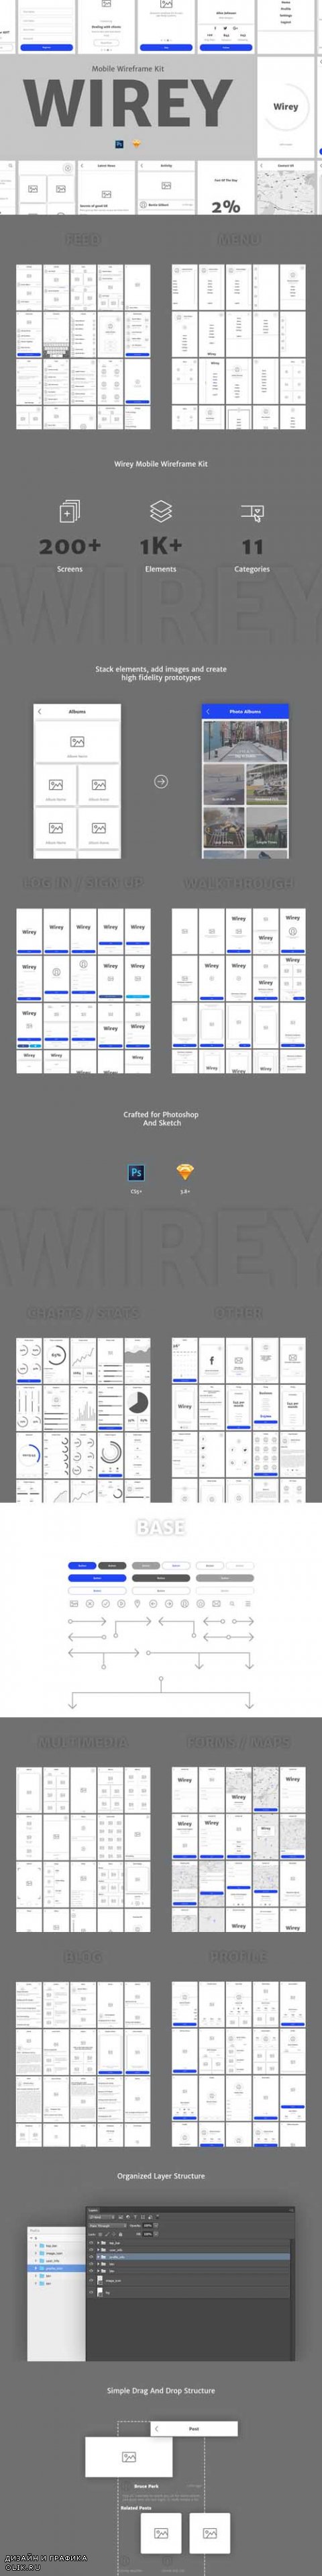 Wirey Mobile Wireframe Kit